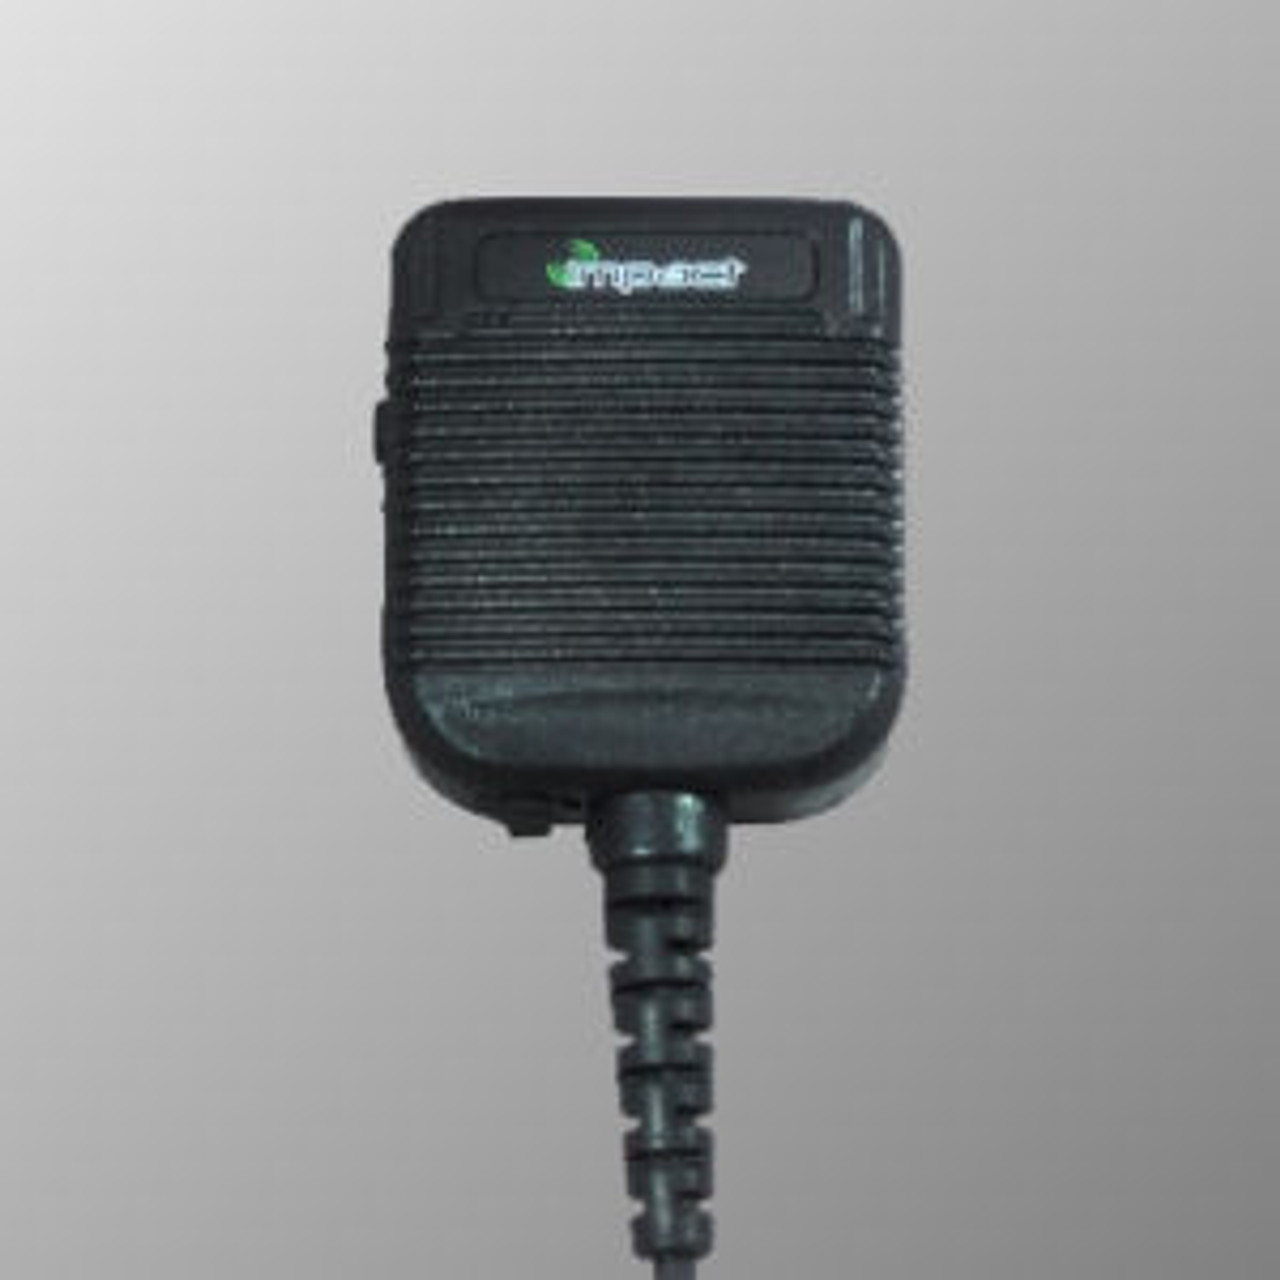 Motorola XV2600 IP67 Ruggedized Speaker Mic.